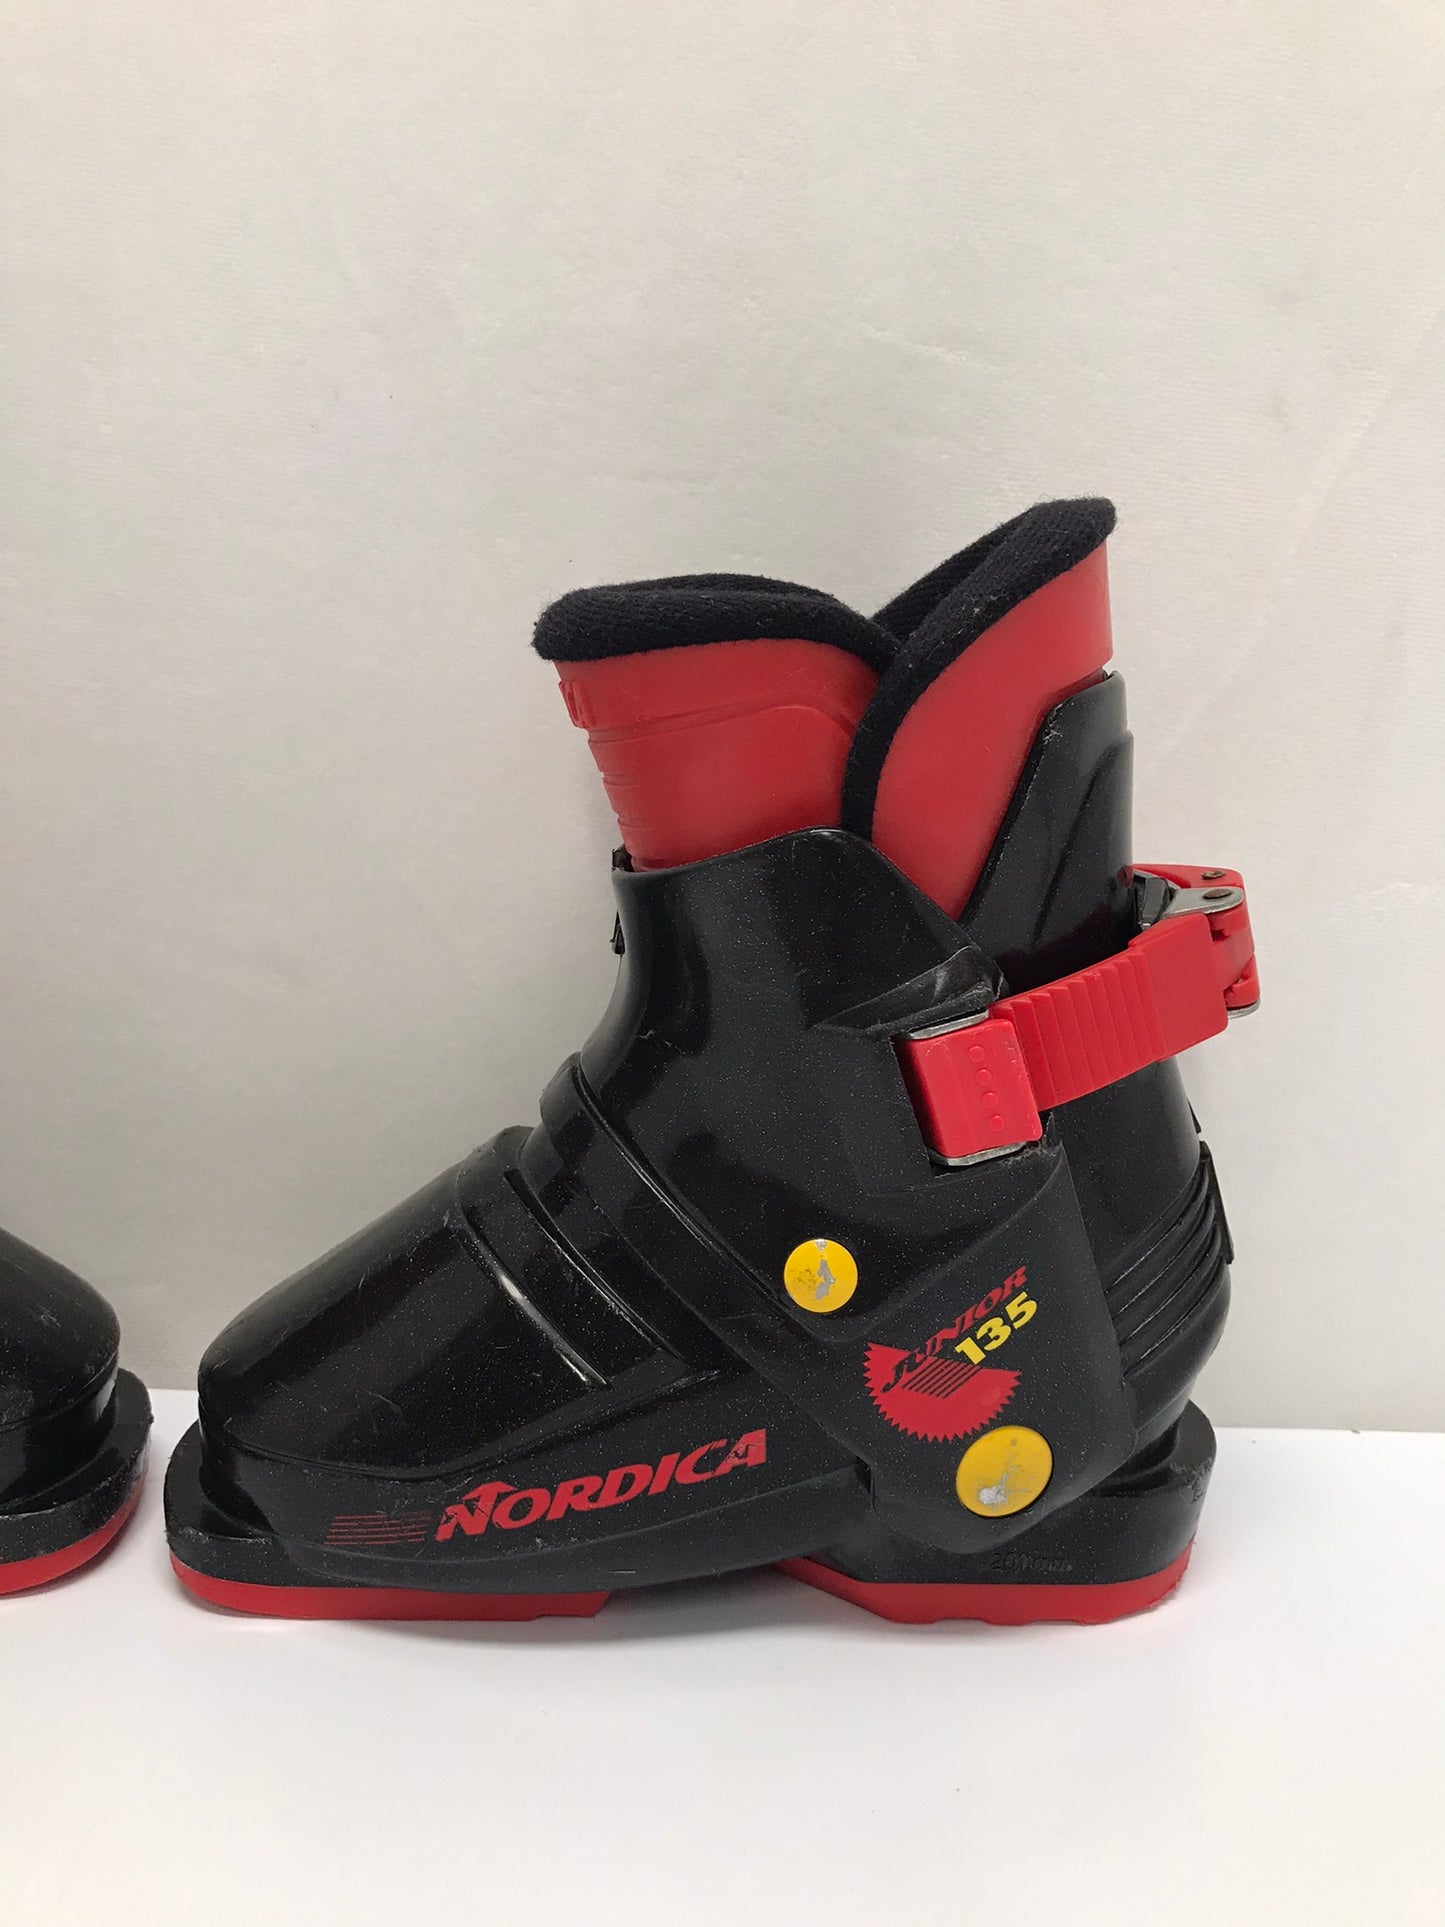 Ski Boots Mondo Size 15.5 Child Size 8.5 15.5  mm Nordica Black Red Some Scratches